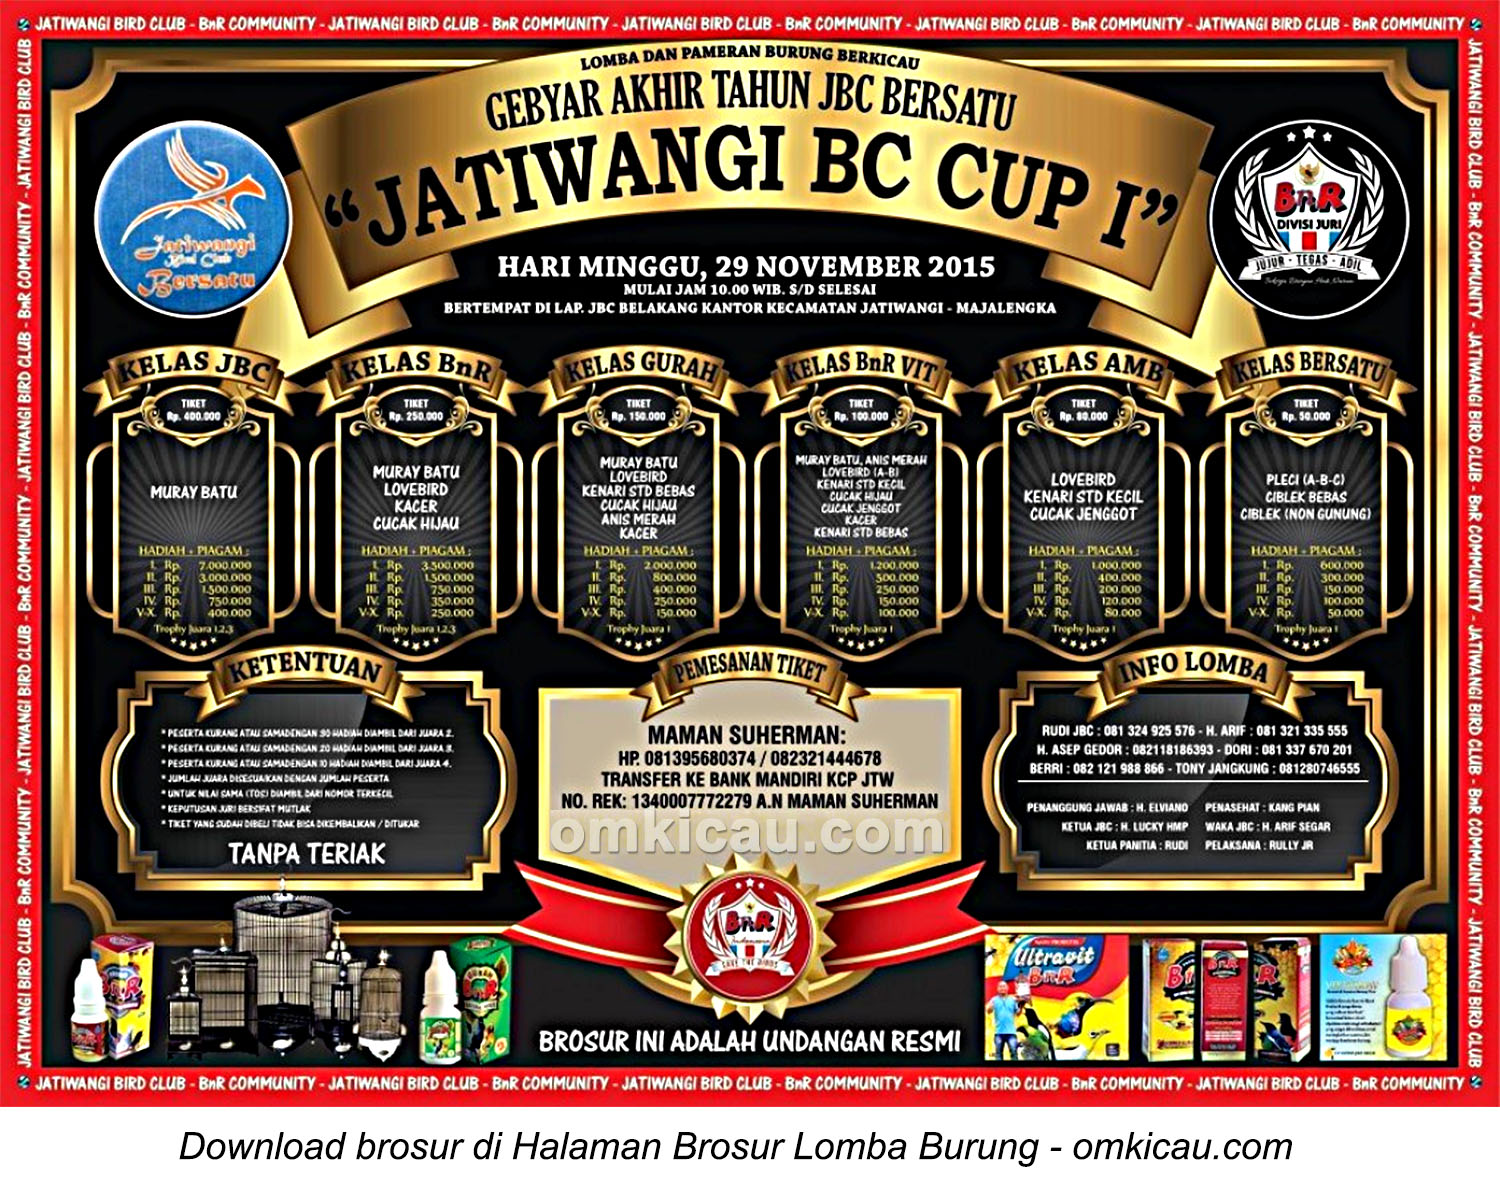 Brosur Lomba Burung Berkicau Jatiwangi BC Cup I, Majalengka, 29 November 2015